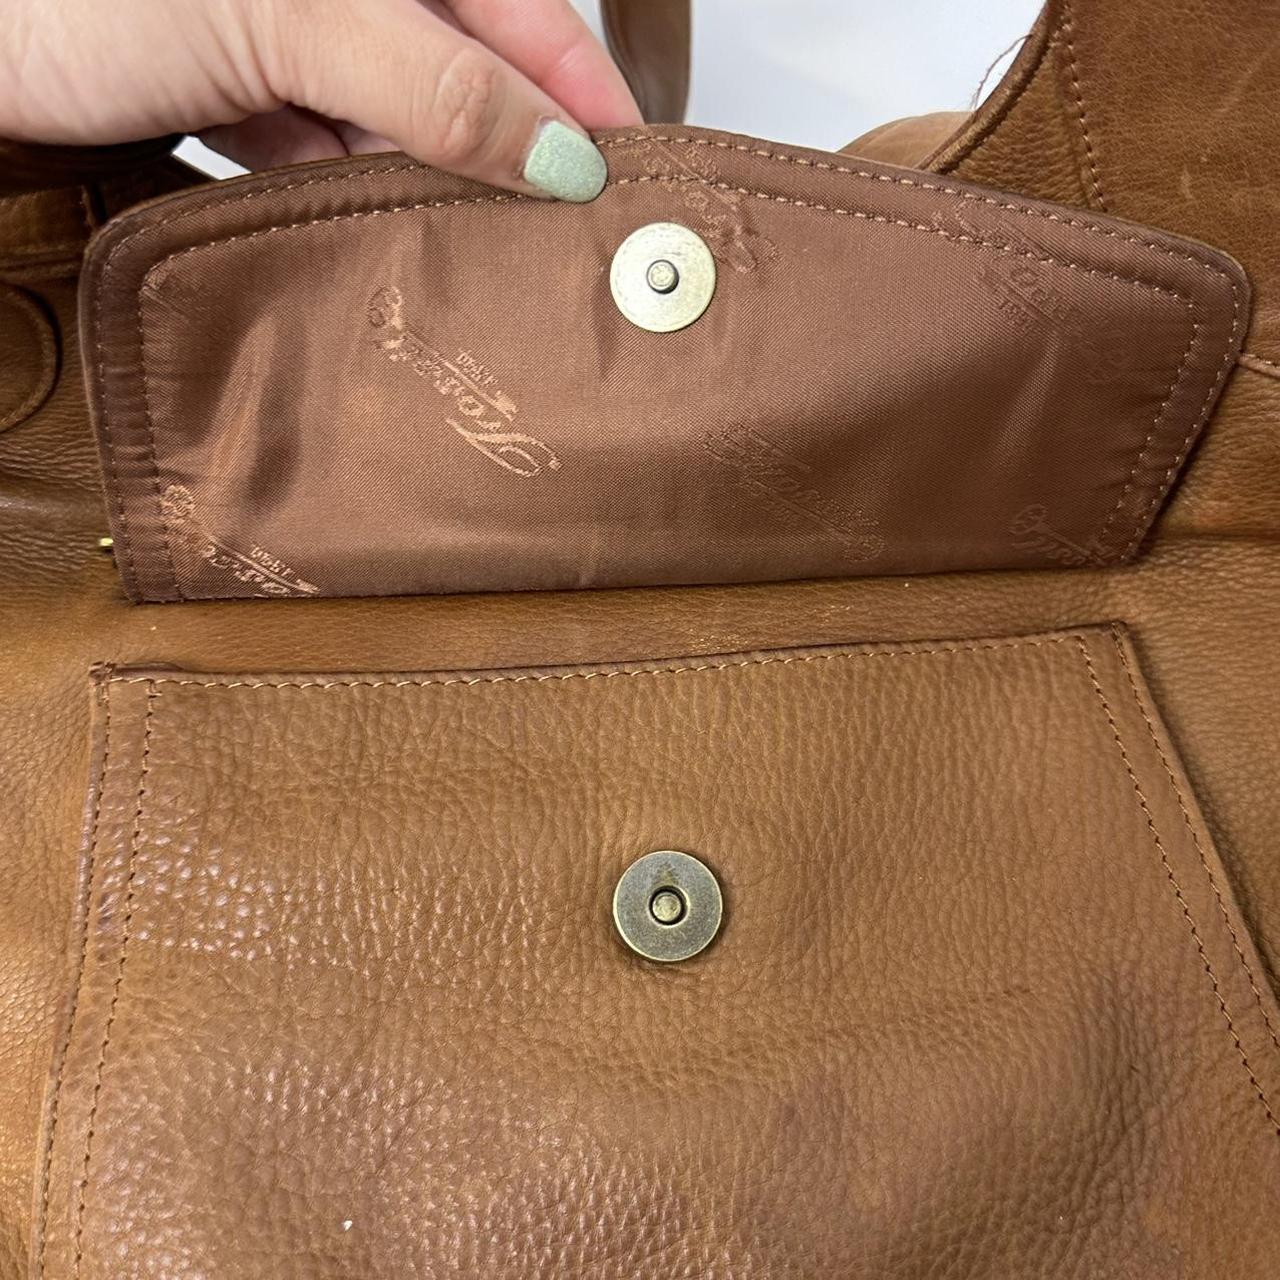 How to Spot a Fake Fossil Handbag | LEAFtv